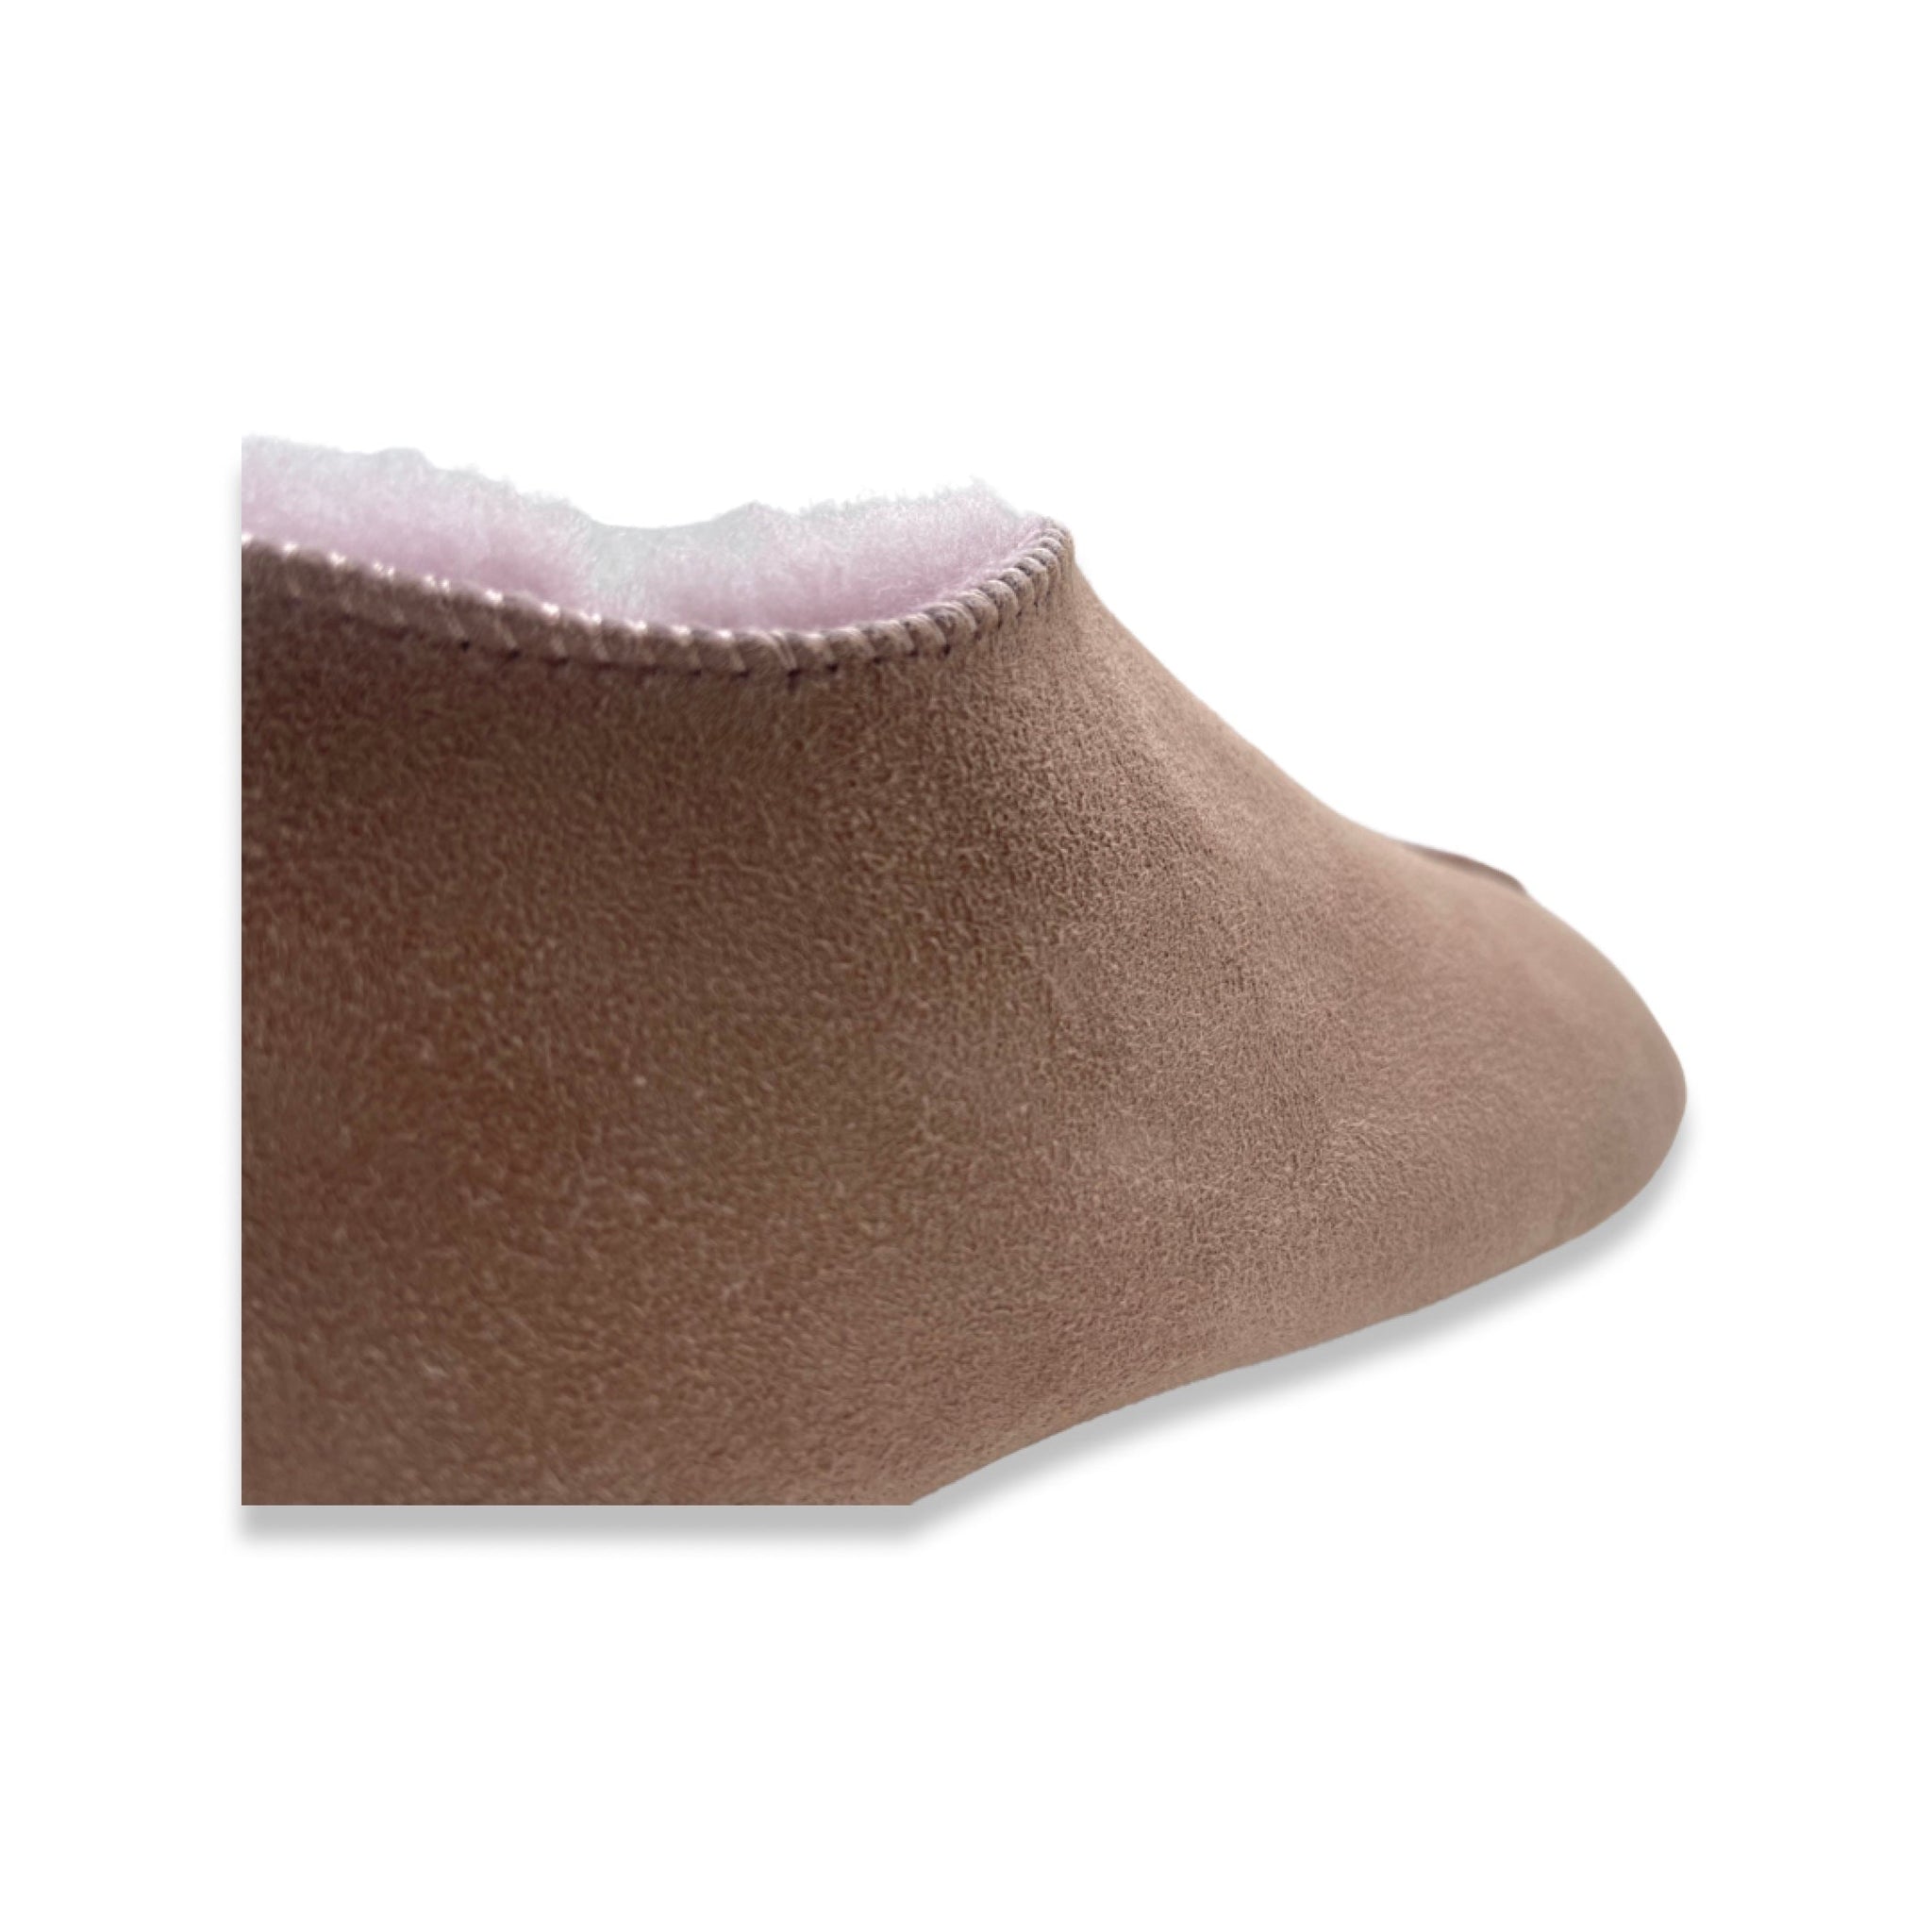 NAT 2 calzado thies 1856 ® Sheep Slipper Boot new pink (W) moda sostenible moda ética